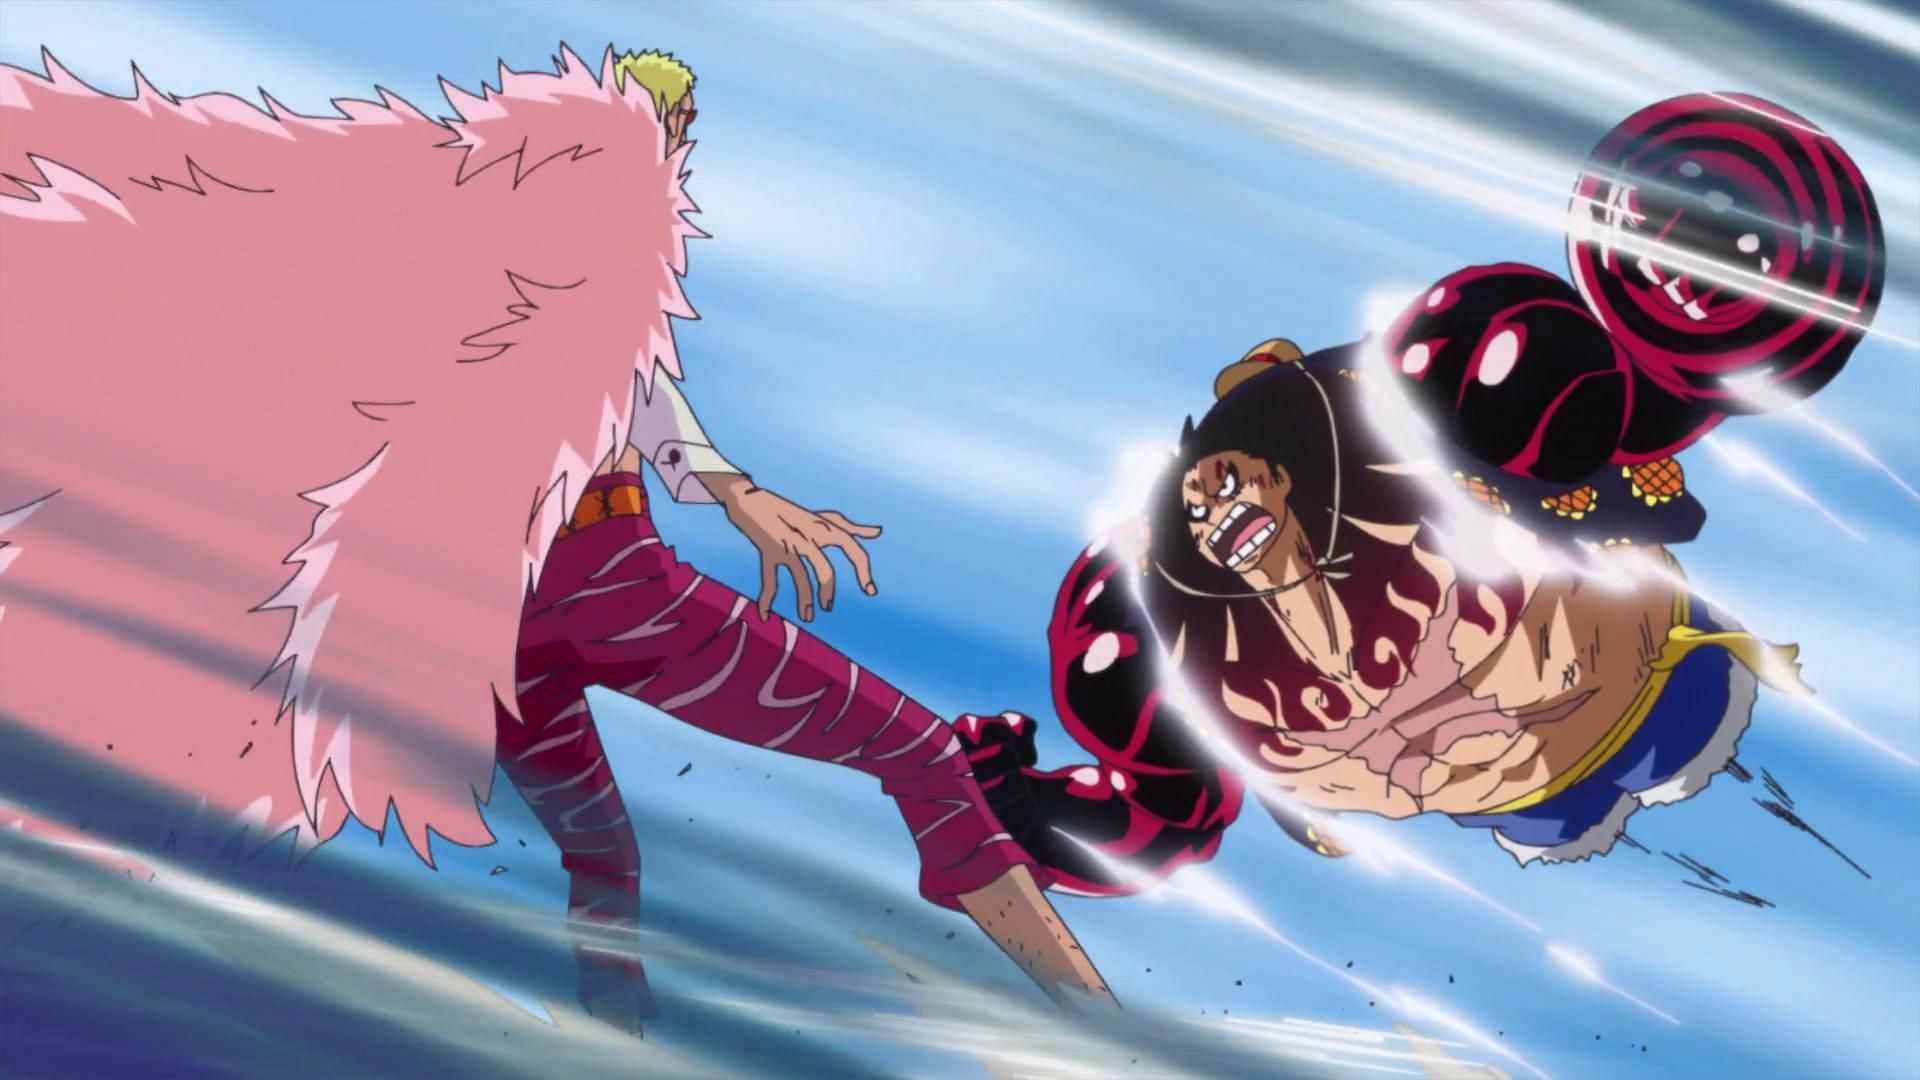 Luffy fighting against Donquixote Doflamingoin One Piece anime (Image via Toei Animation)